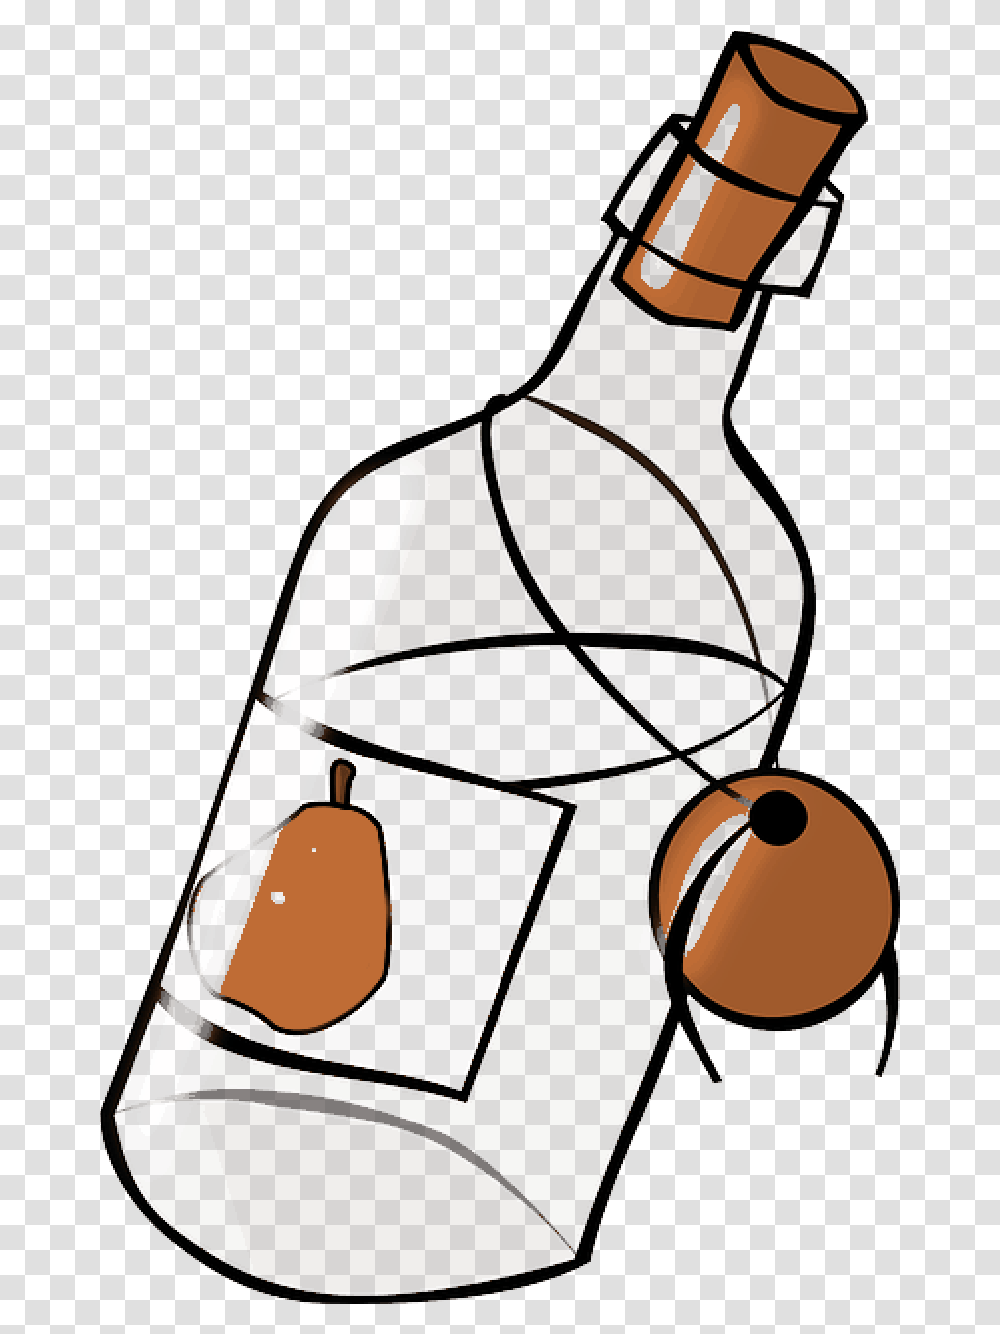 Moonshine Bottle Clipart Cartoon Light Liquor Vector Icon Message In A Bottle Clipart, Clothing, Beverage, Alcohol, Label Transparent Png